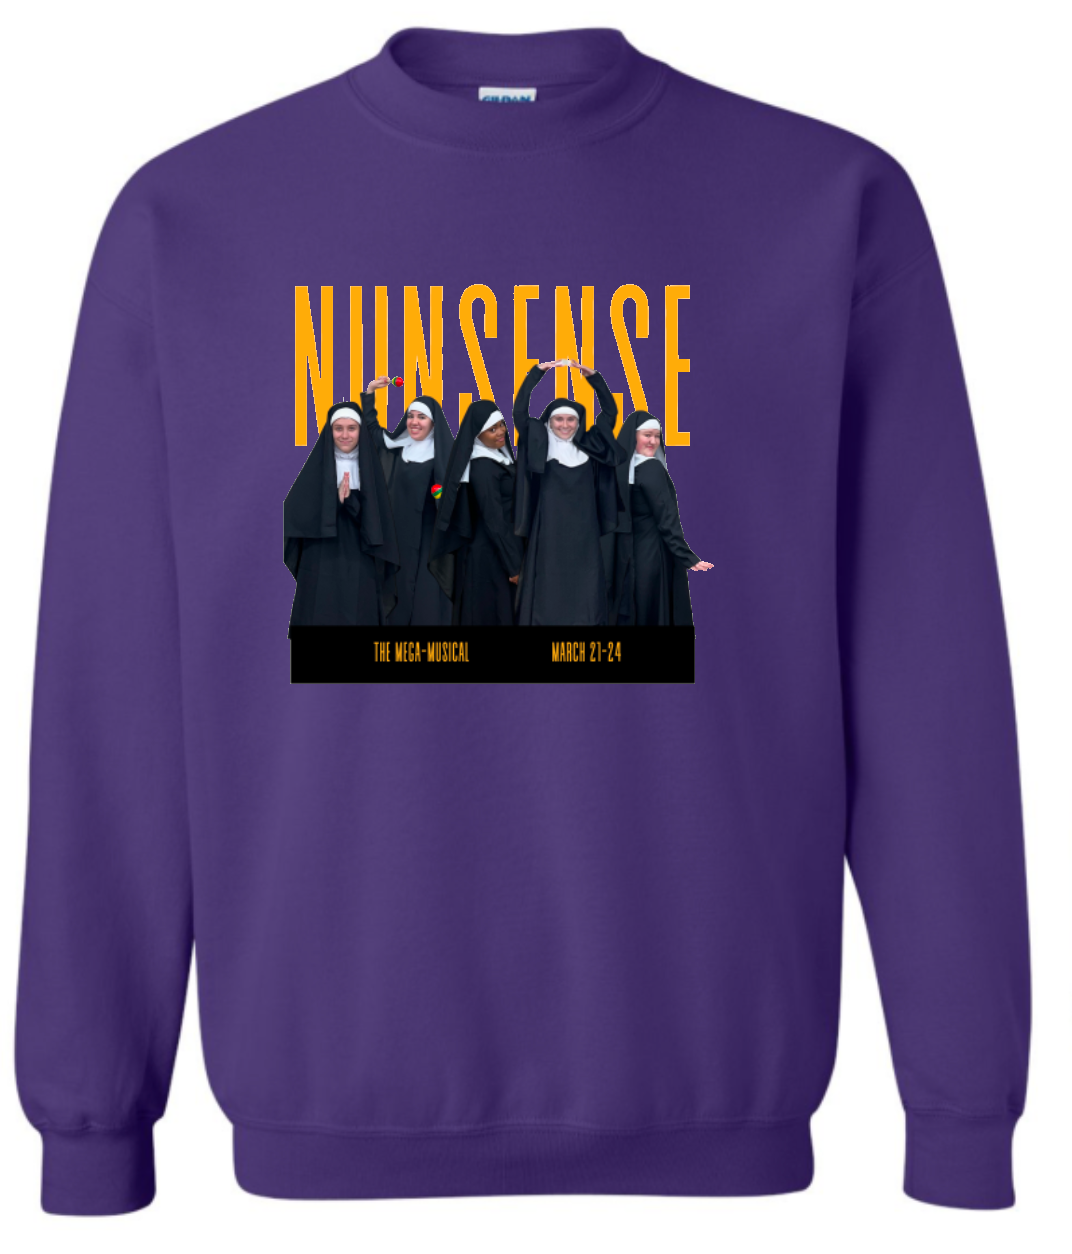 PCHS Nunsense Theatre Crewneck Sweatshirt